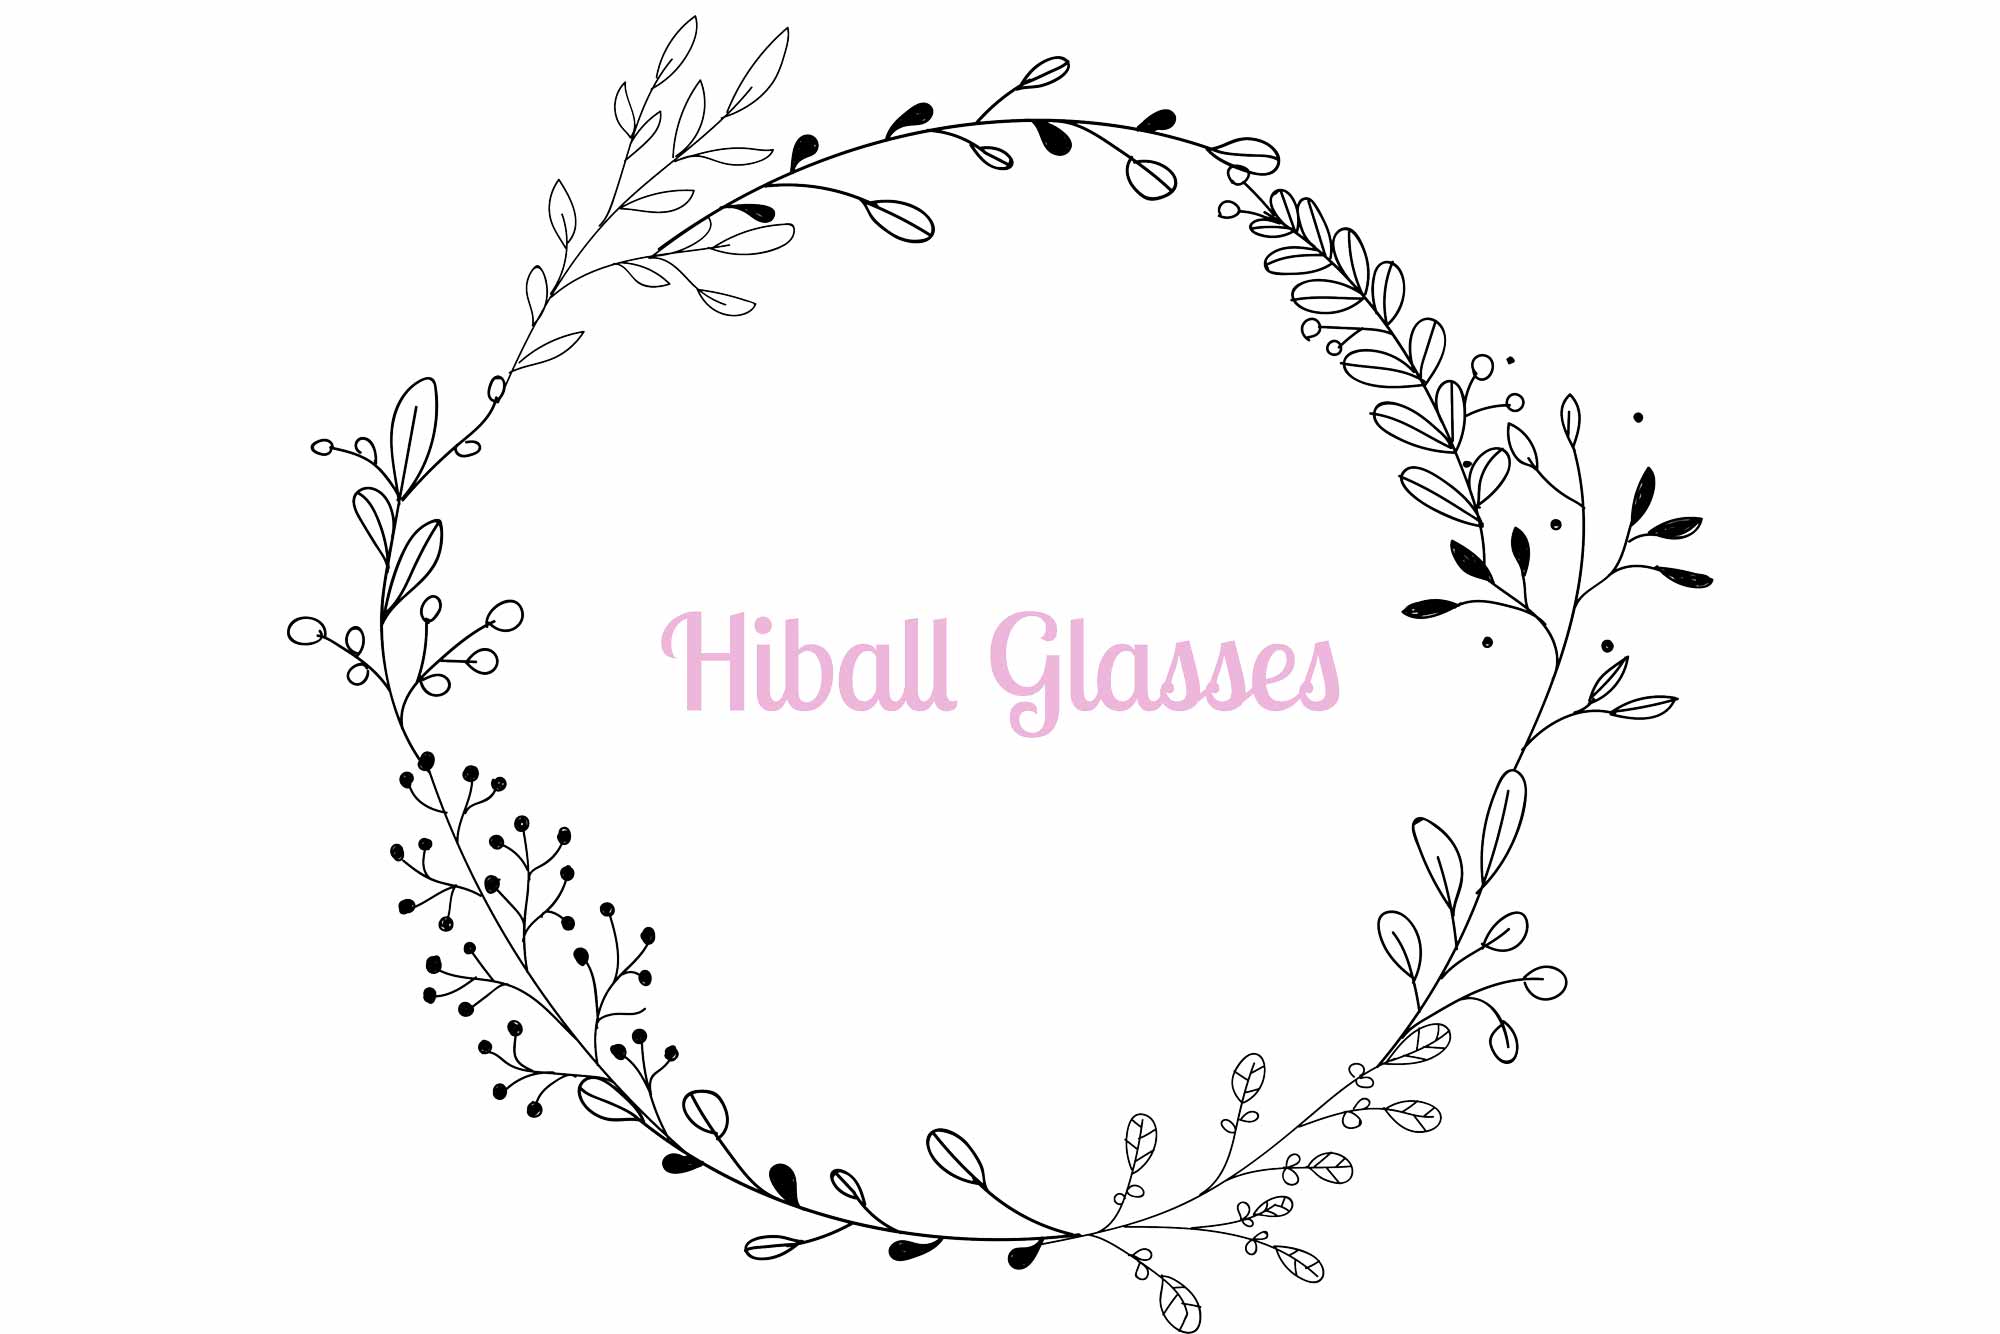 Hiball Glasses